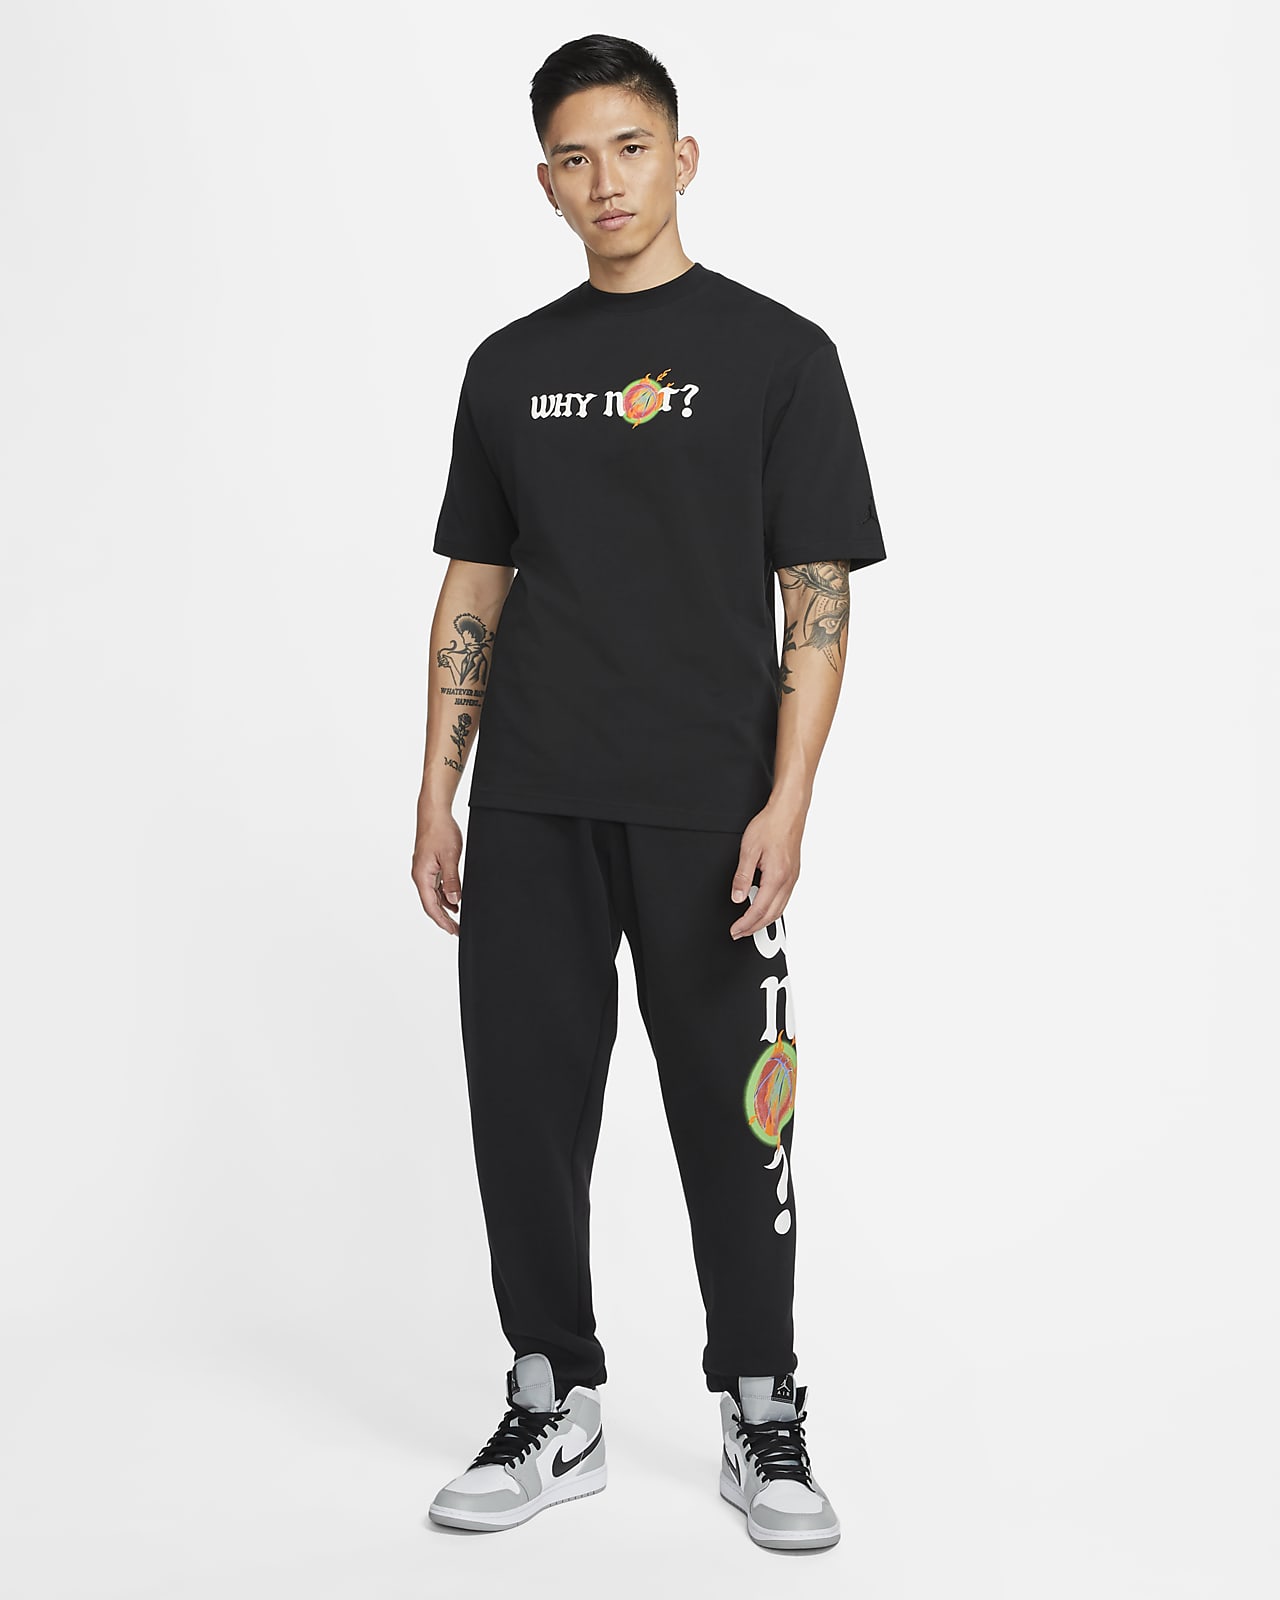 Nike公式 ジョーダン Why Not メンズ ショートスリーブ Tシャツ オンラインストア 通販サイト